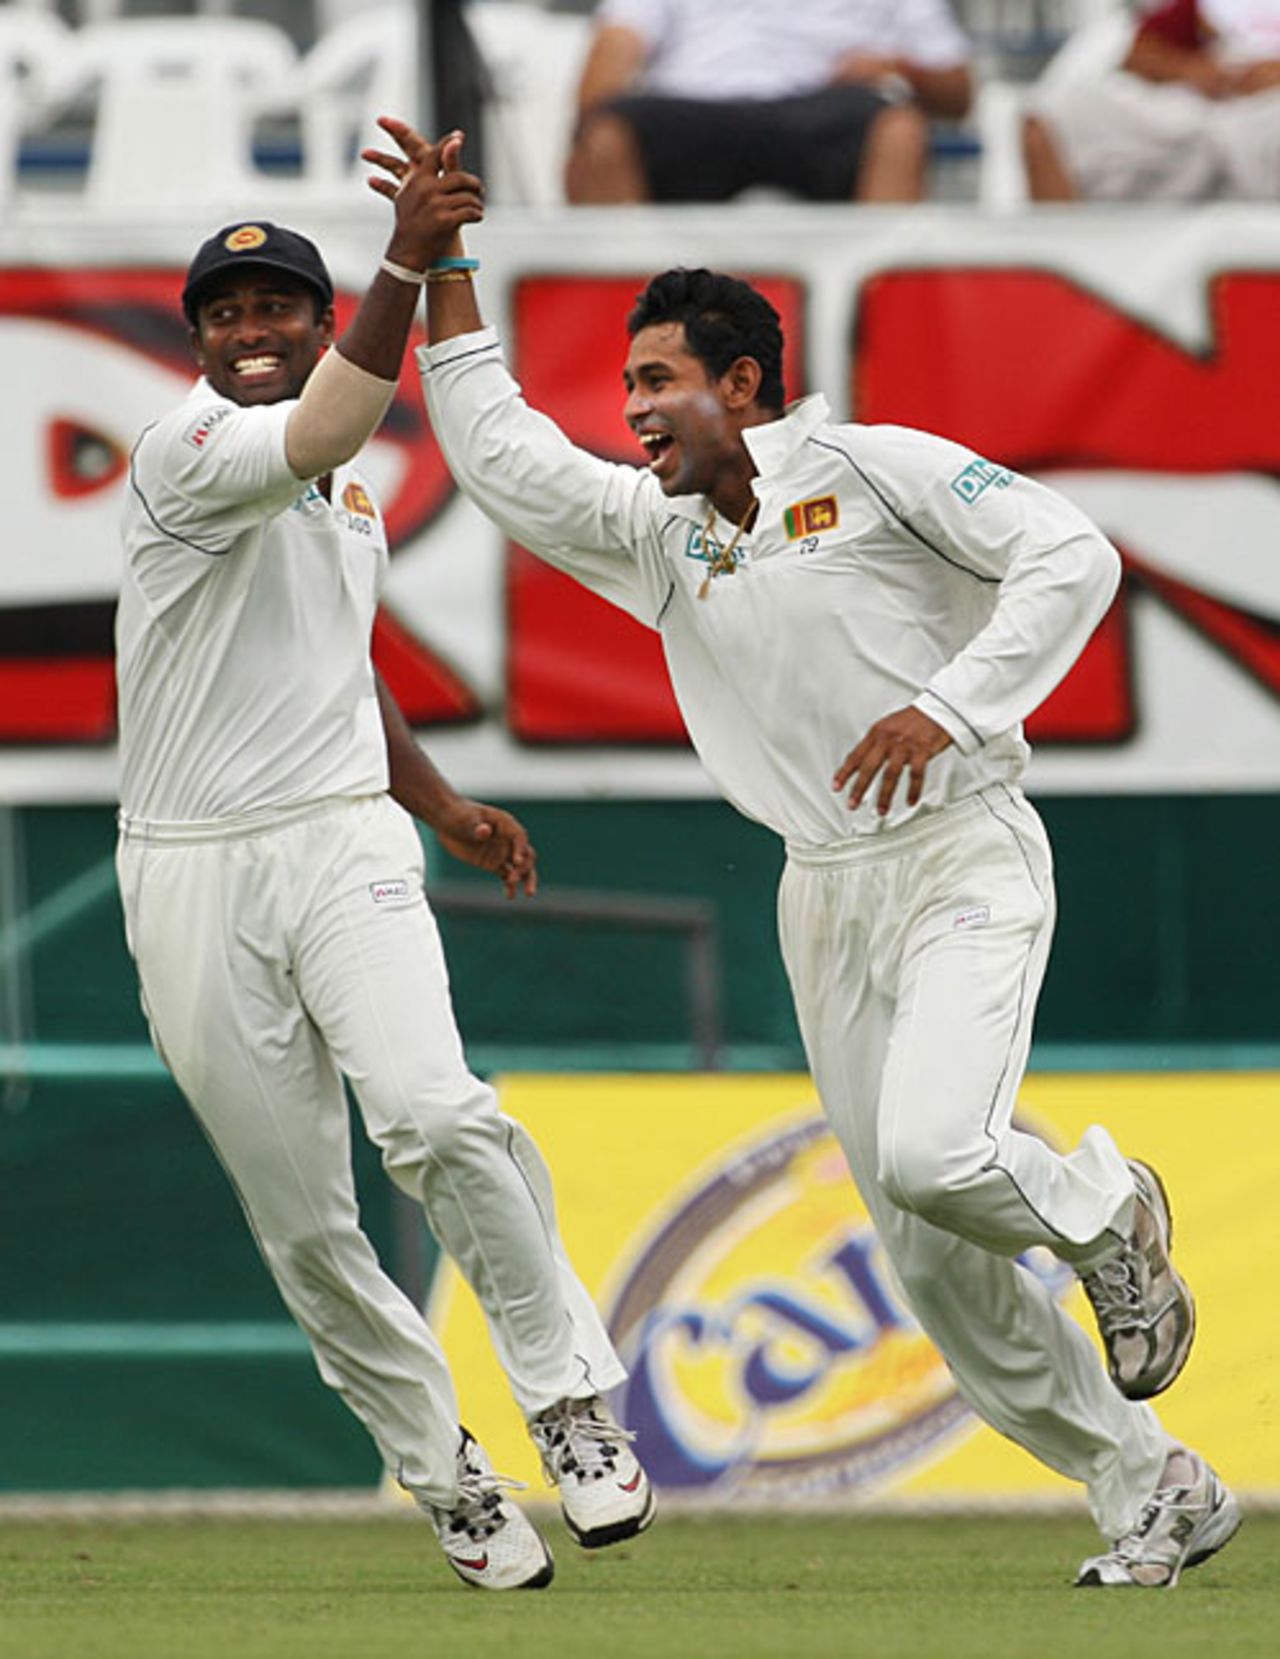 Tillakaratne Dilshan celebrates after catching Chris Gayle,  West Indies v Sri Lanka, 2nd Test, Trinidad, 4th day, April 6, 2008 